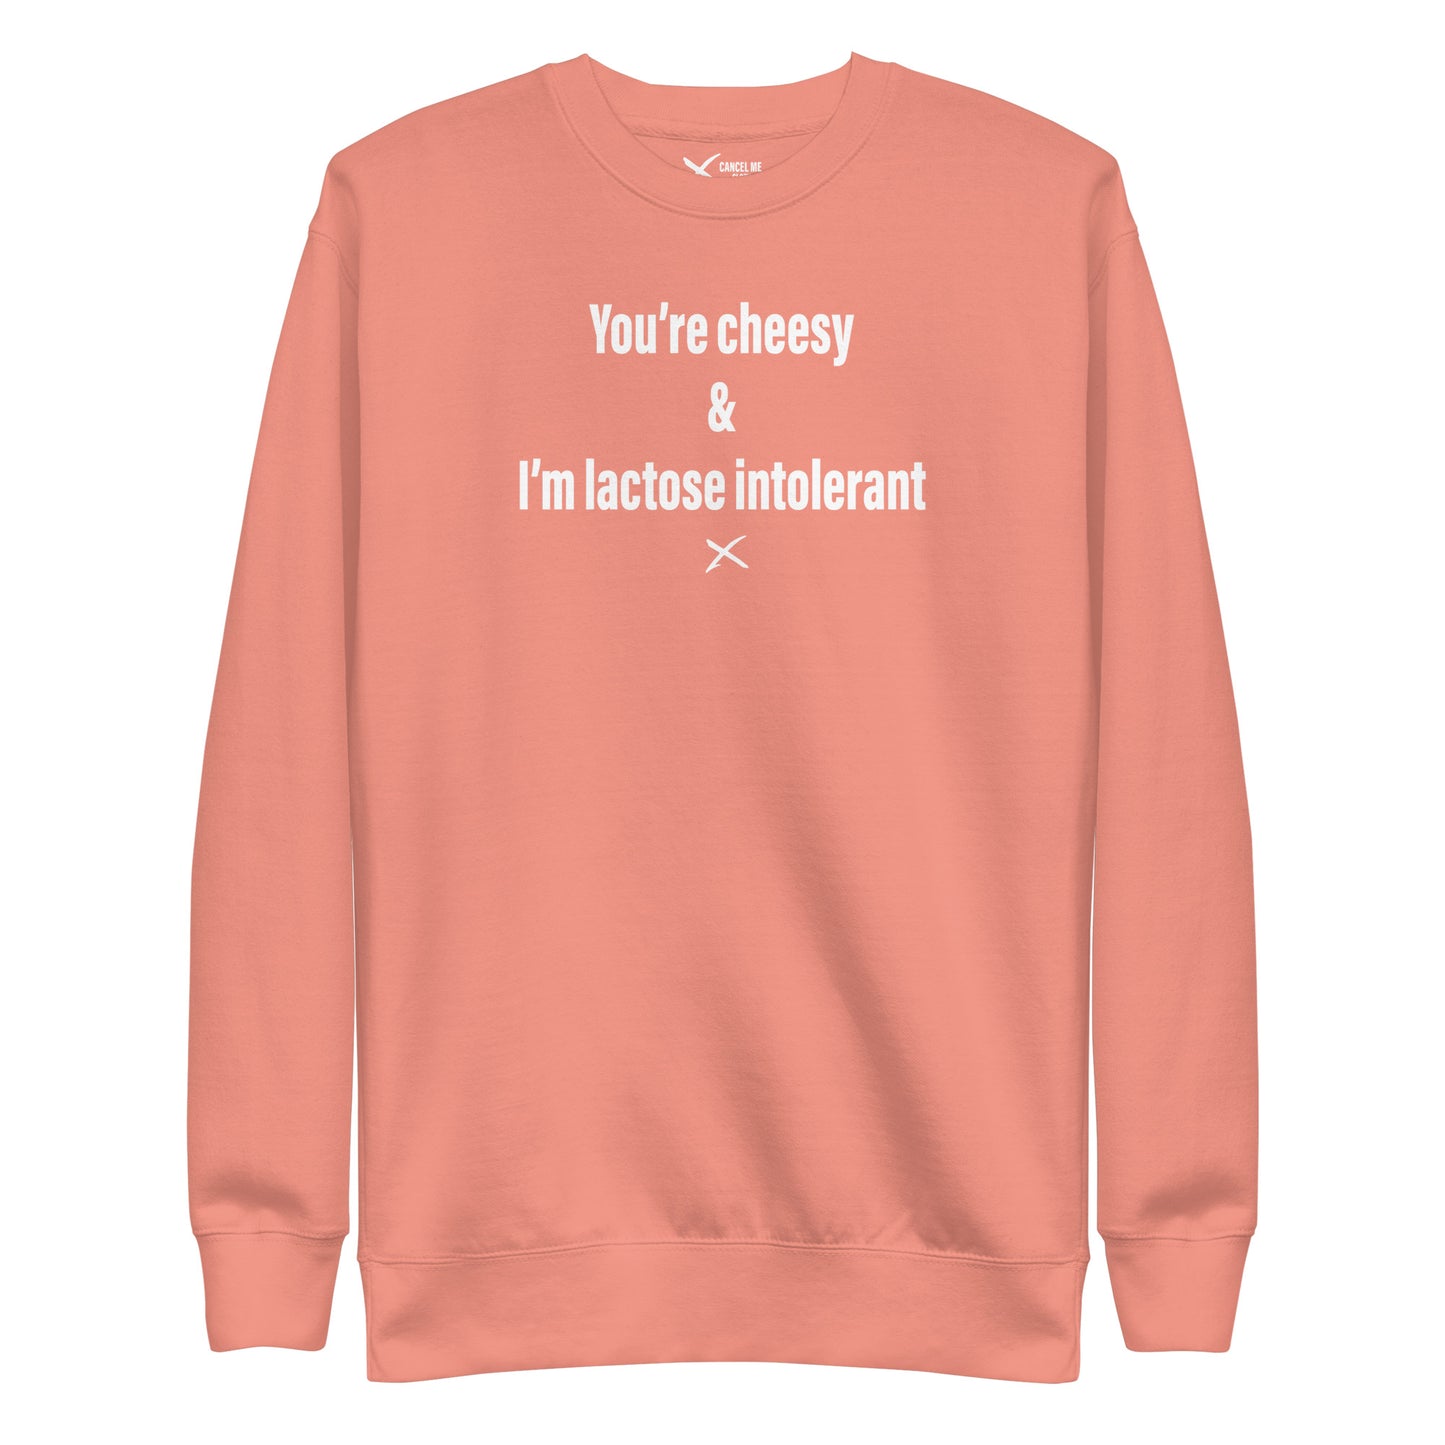 You're cheesy & I'm lactose intolerant - Sweatshirt